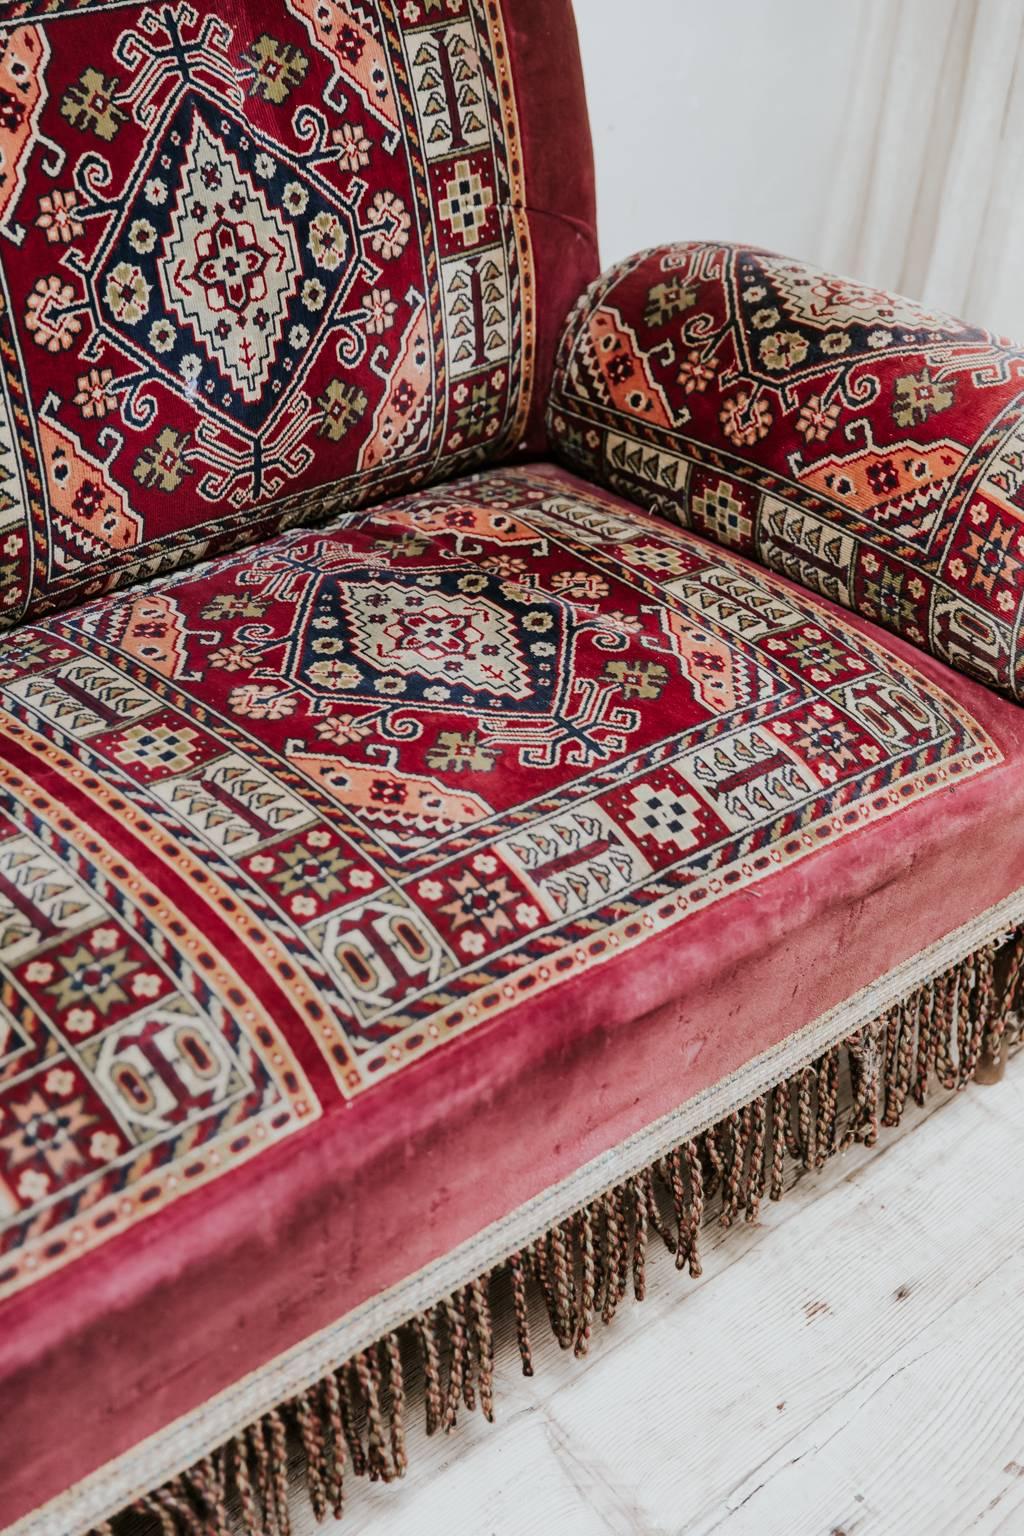 Woven 19th Century Canapé/Sofa